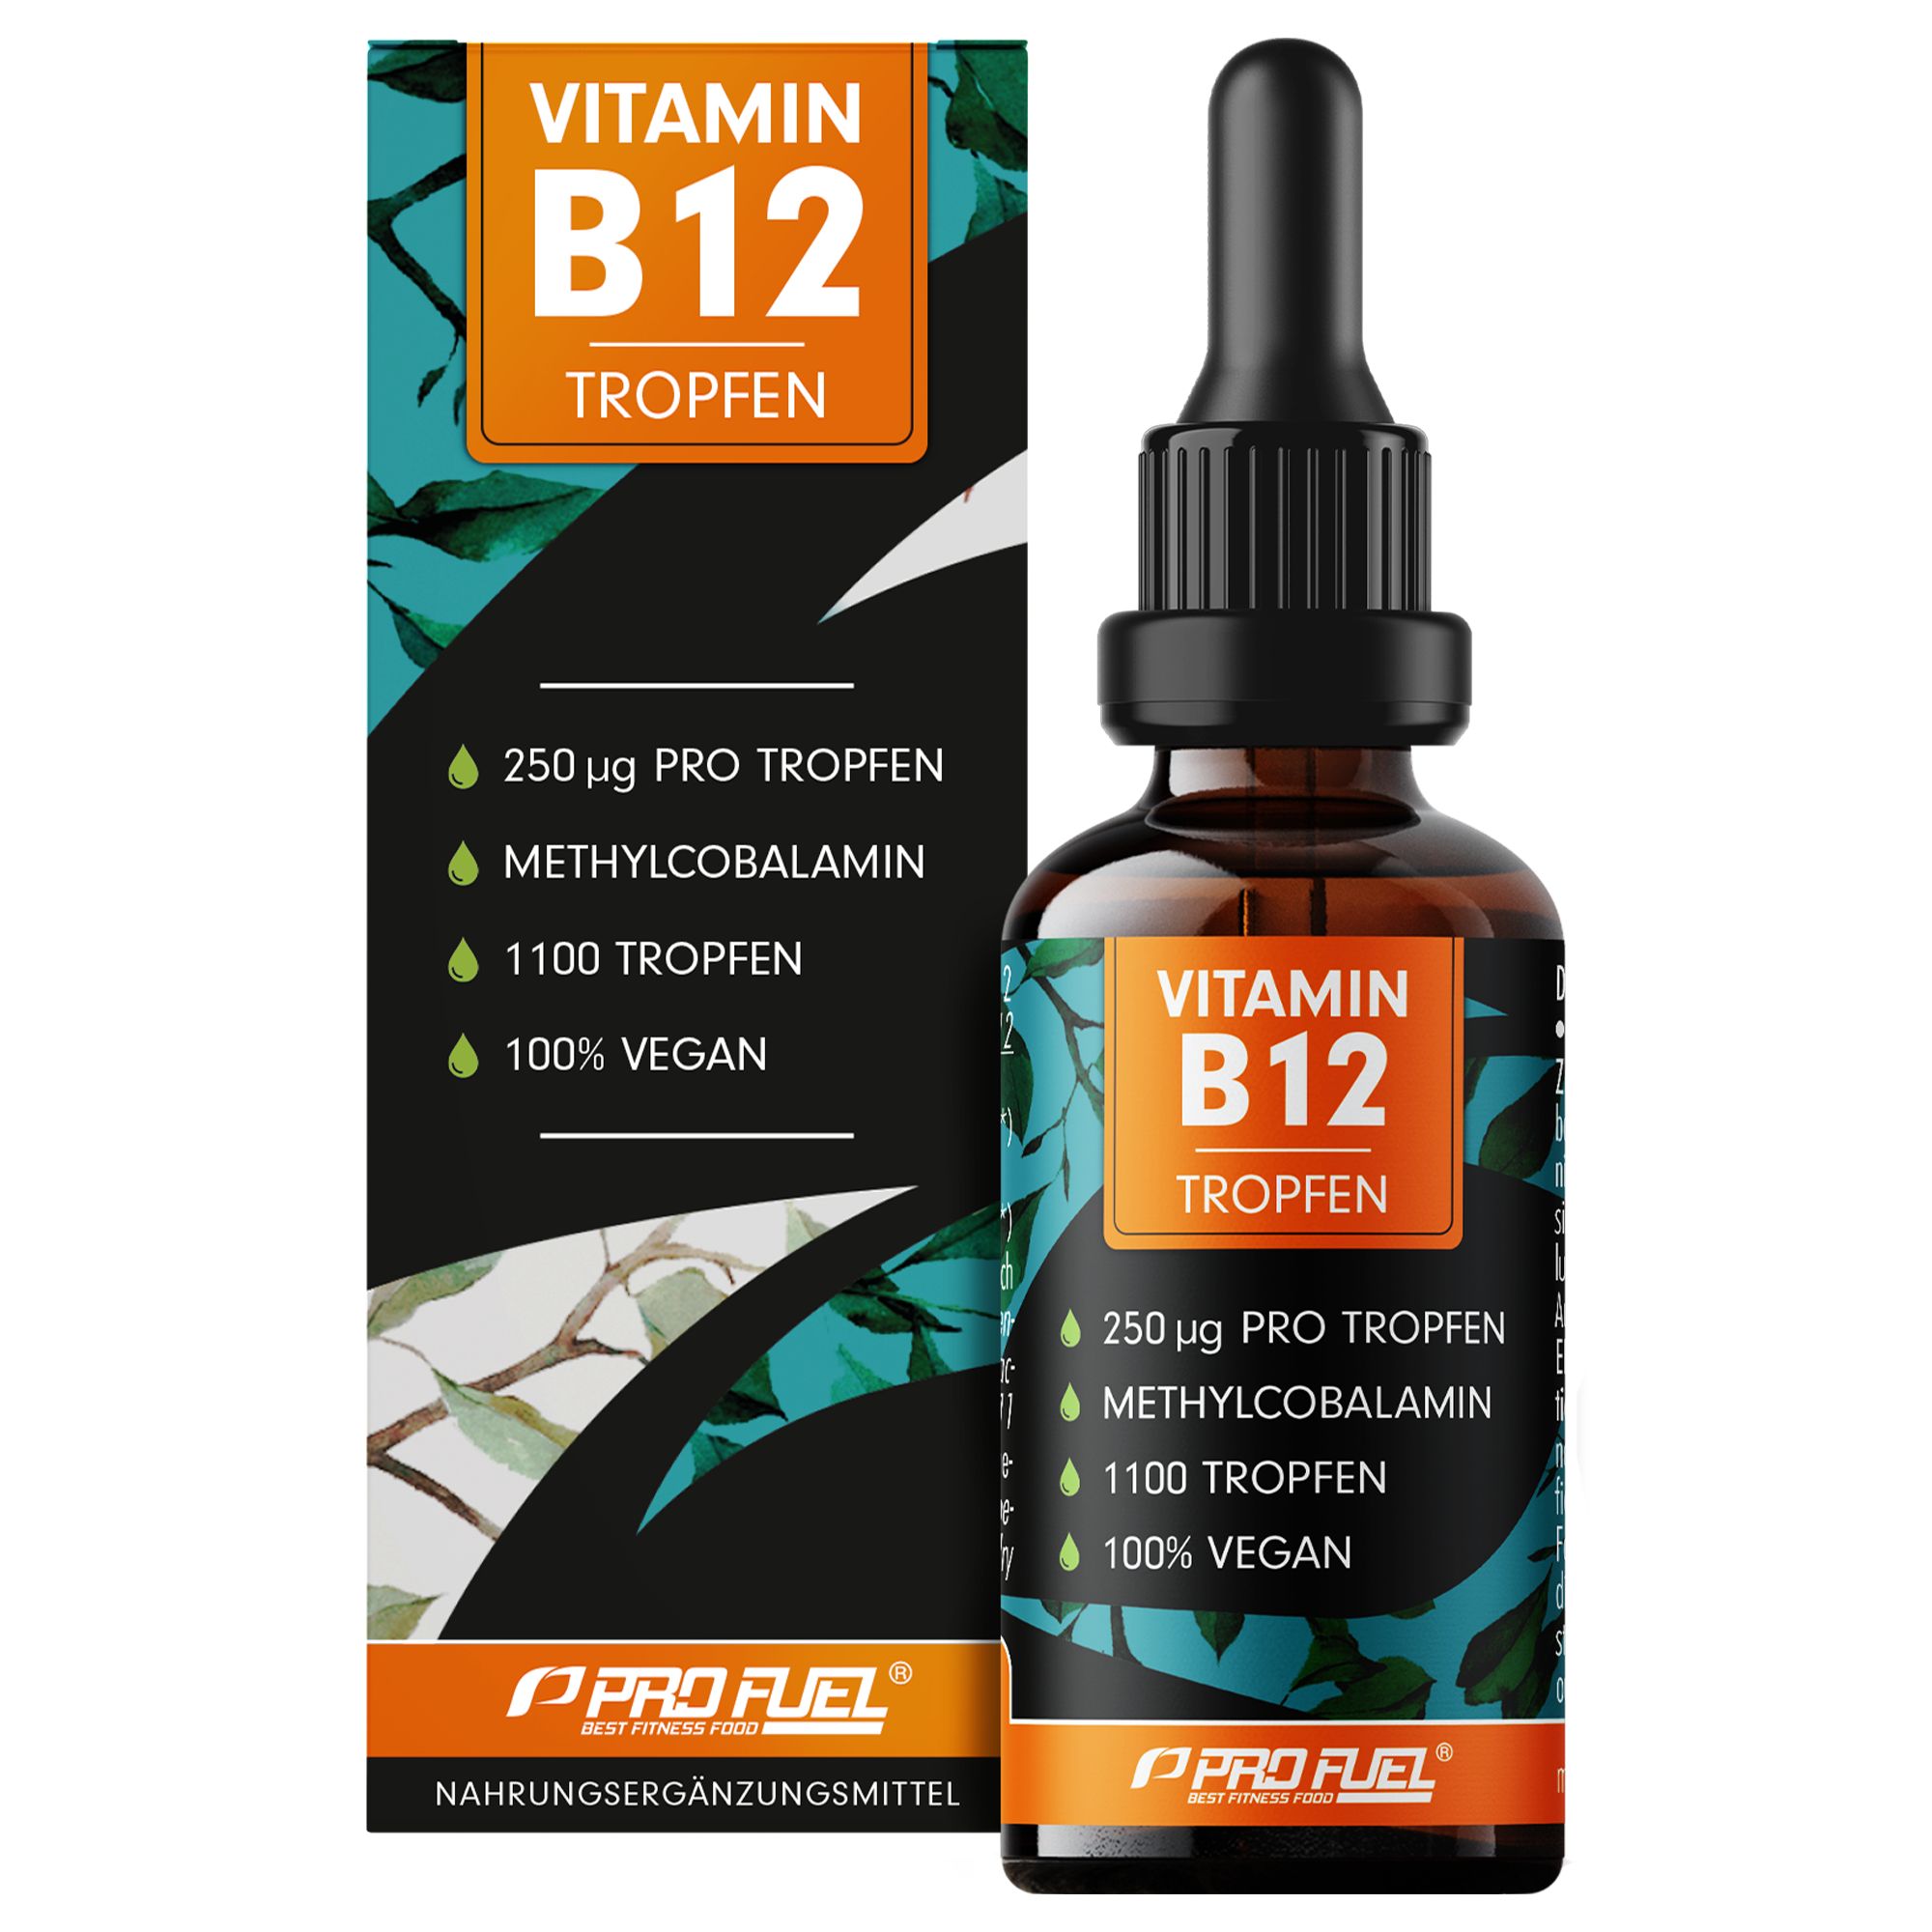 ProFuel - Vitamin B12 Tropfen - 500 mcg bioaktives Vitamin B12 (Methylcobalamin) pro Tropfen